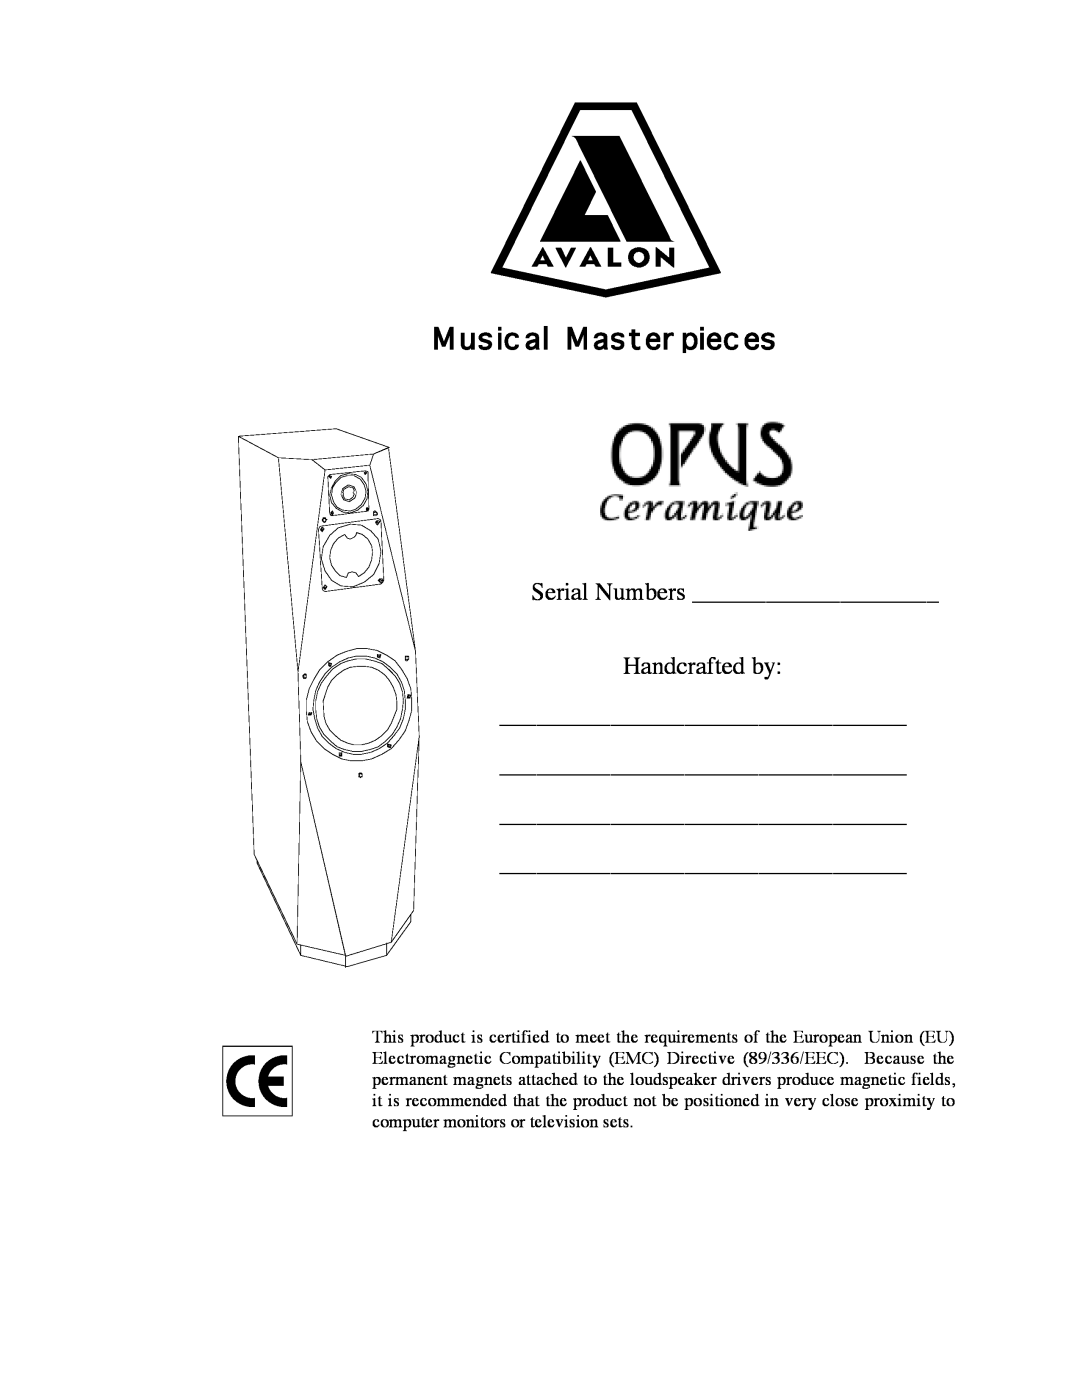 Avalon Acoustics OPUS Ceramique Loudspeaker manual Serial Numbers, Handcrafted by, Music al Master piec es 